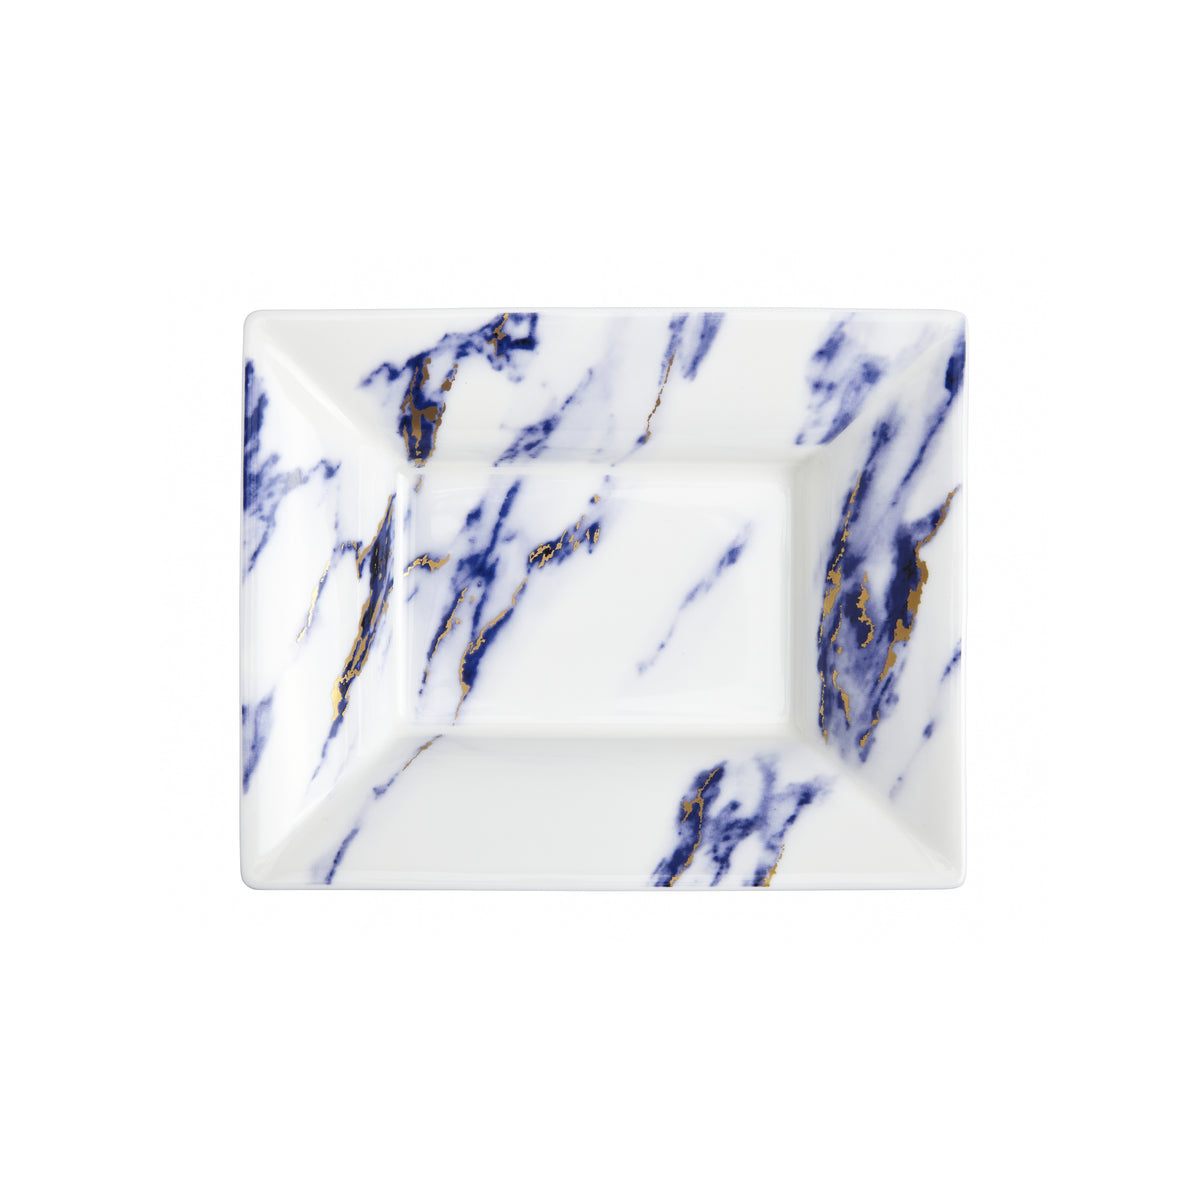 Prouna Marble Azure Vide Poche / Jewelry Tray White Background Photo